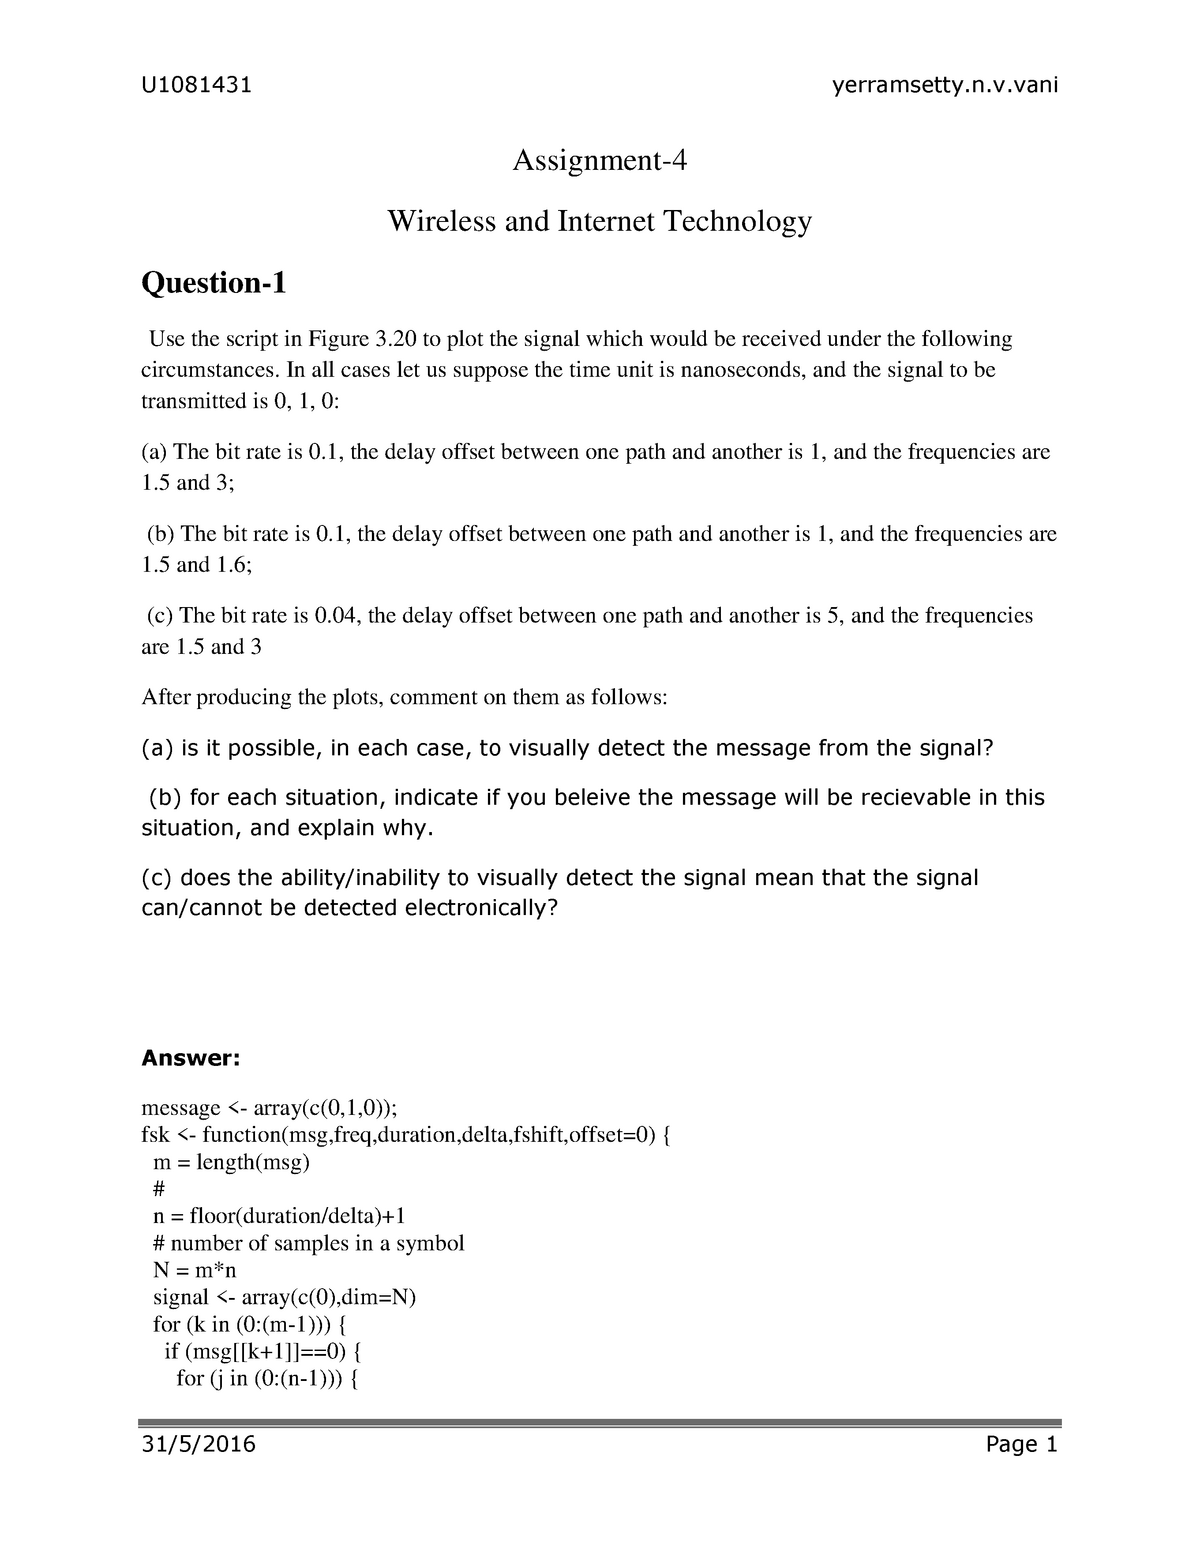 assignment quiz module 06 wireless networking